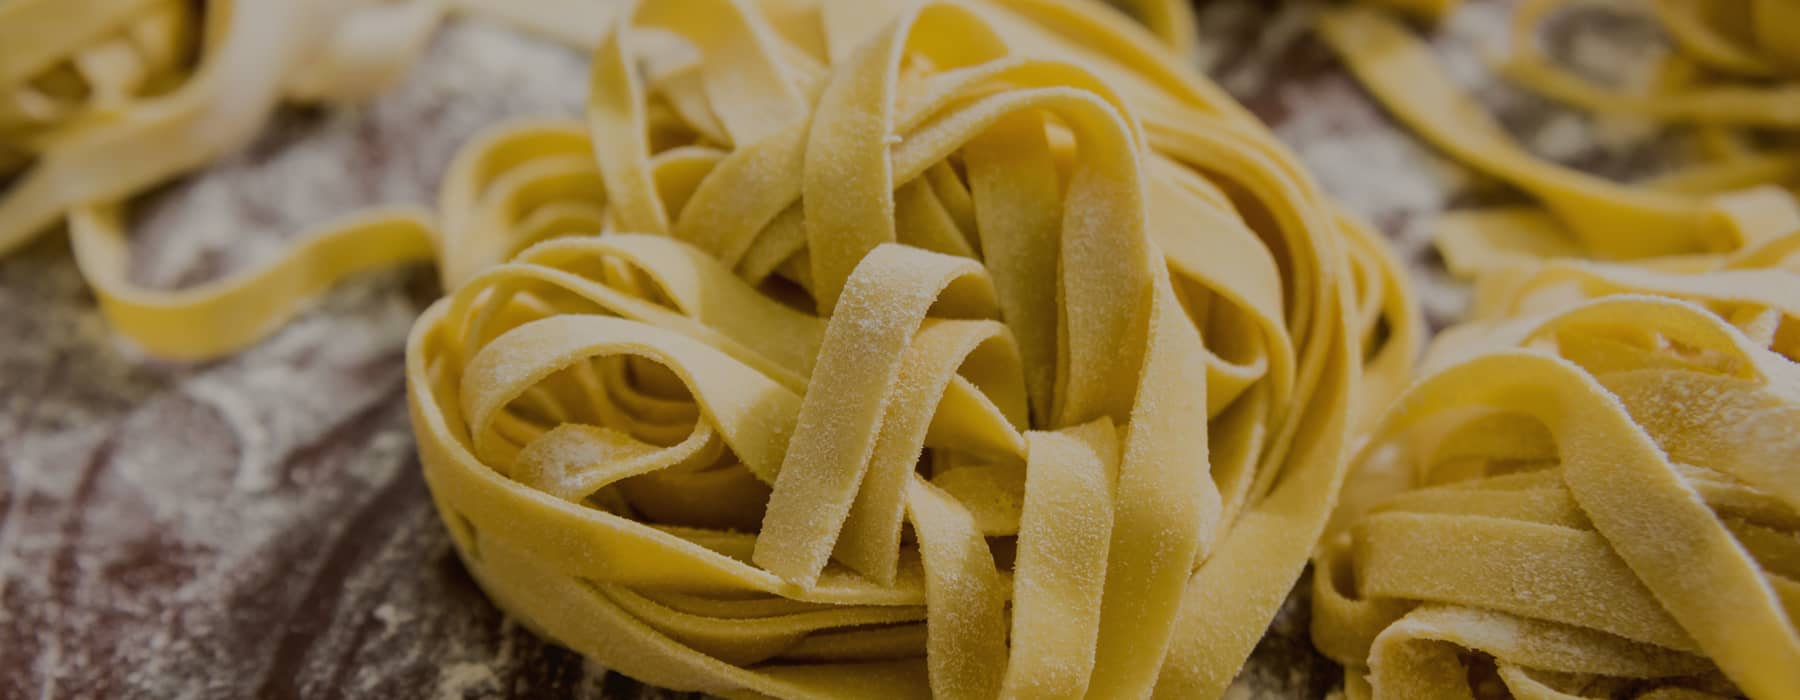 Bellata Gold fresh pasta linguine rolls made with Duralina durum semolina